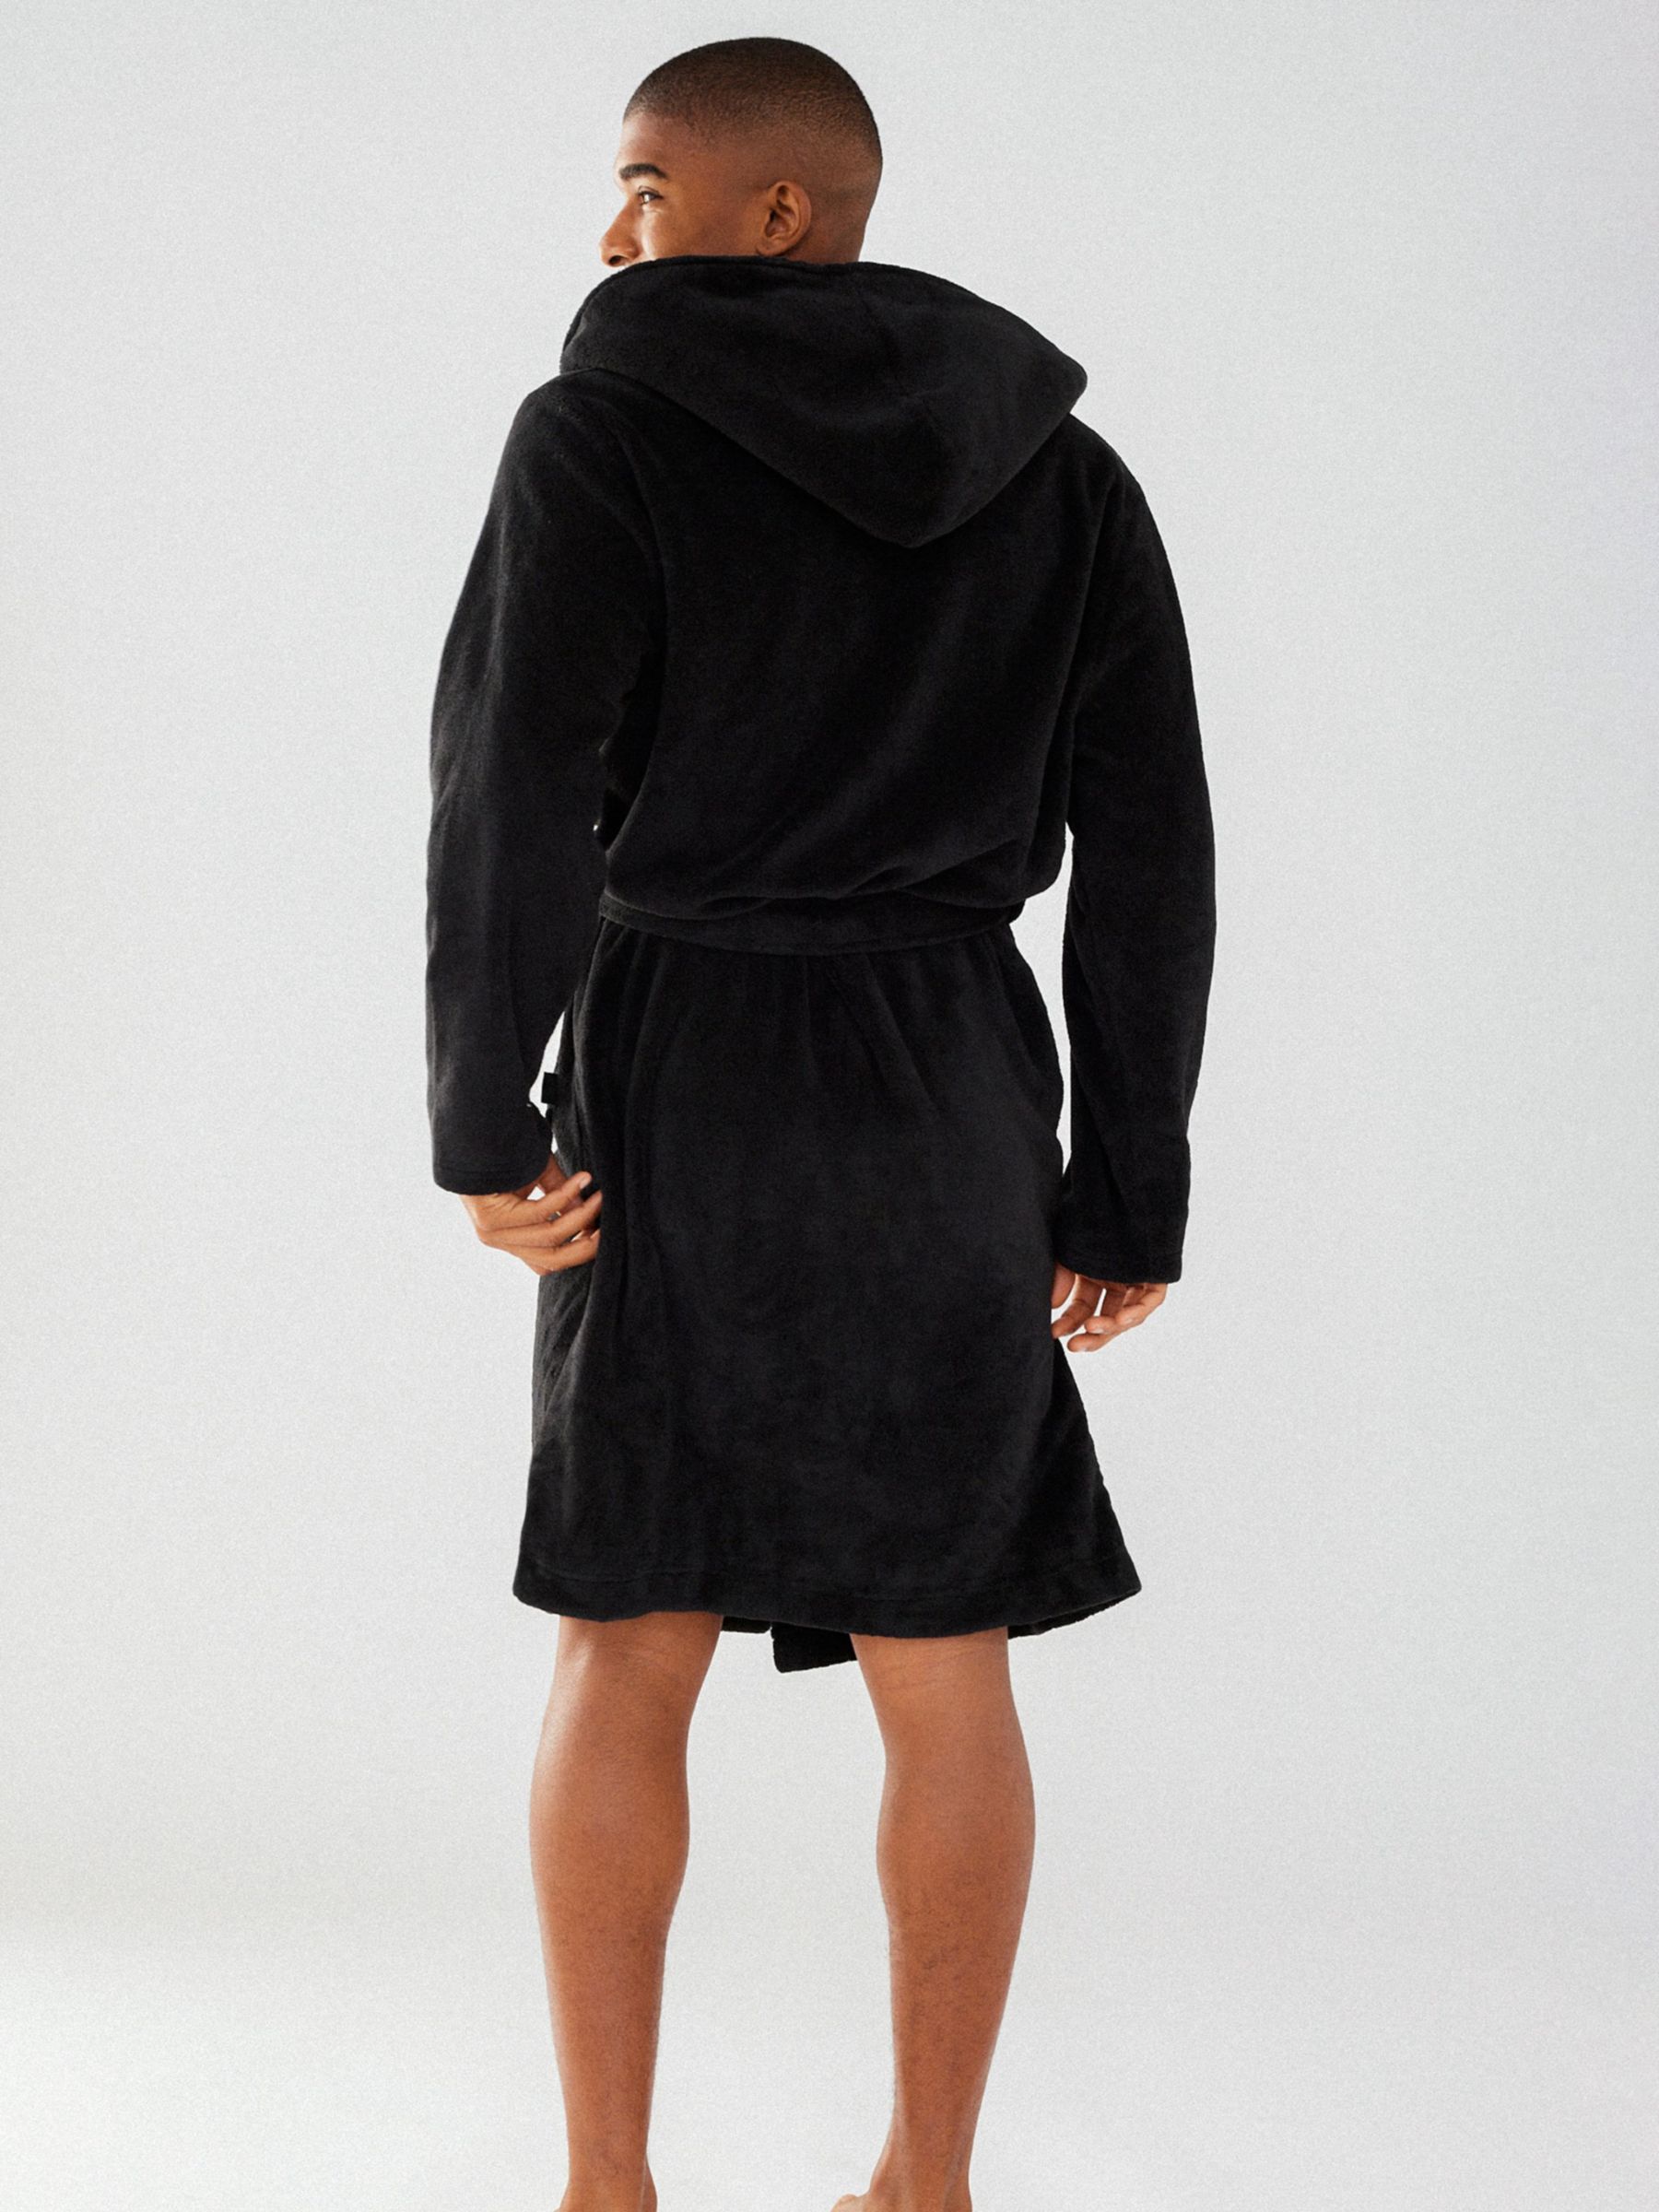 Chelsea Peers Fluffy Hooded Dressing Gown, Black, L